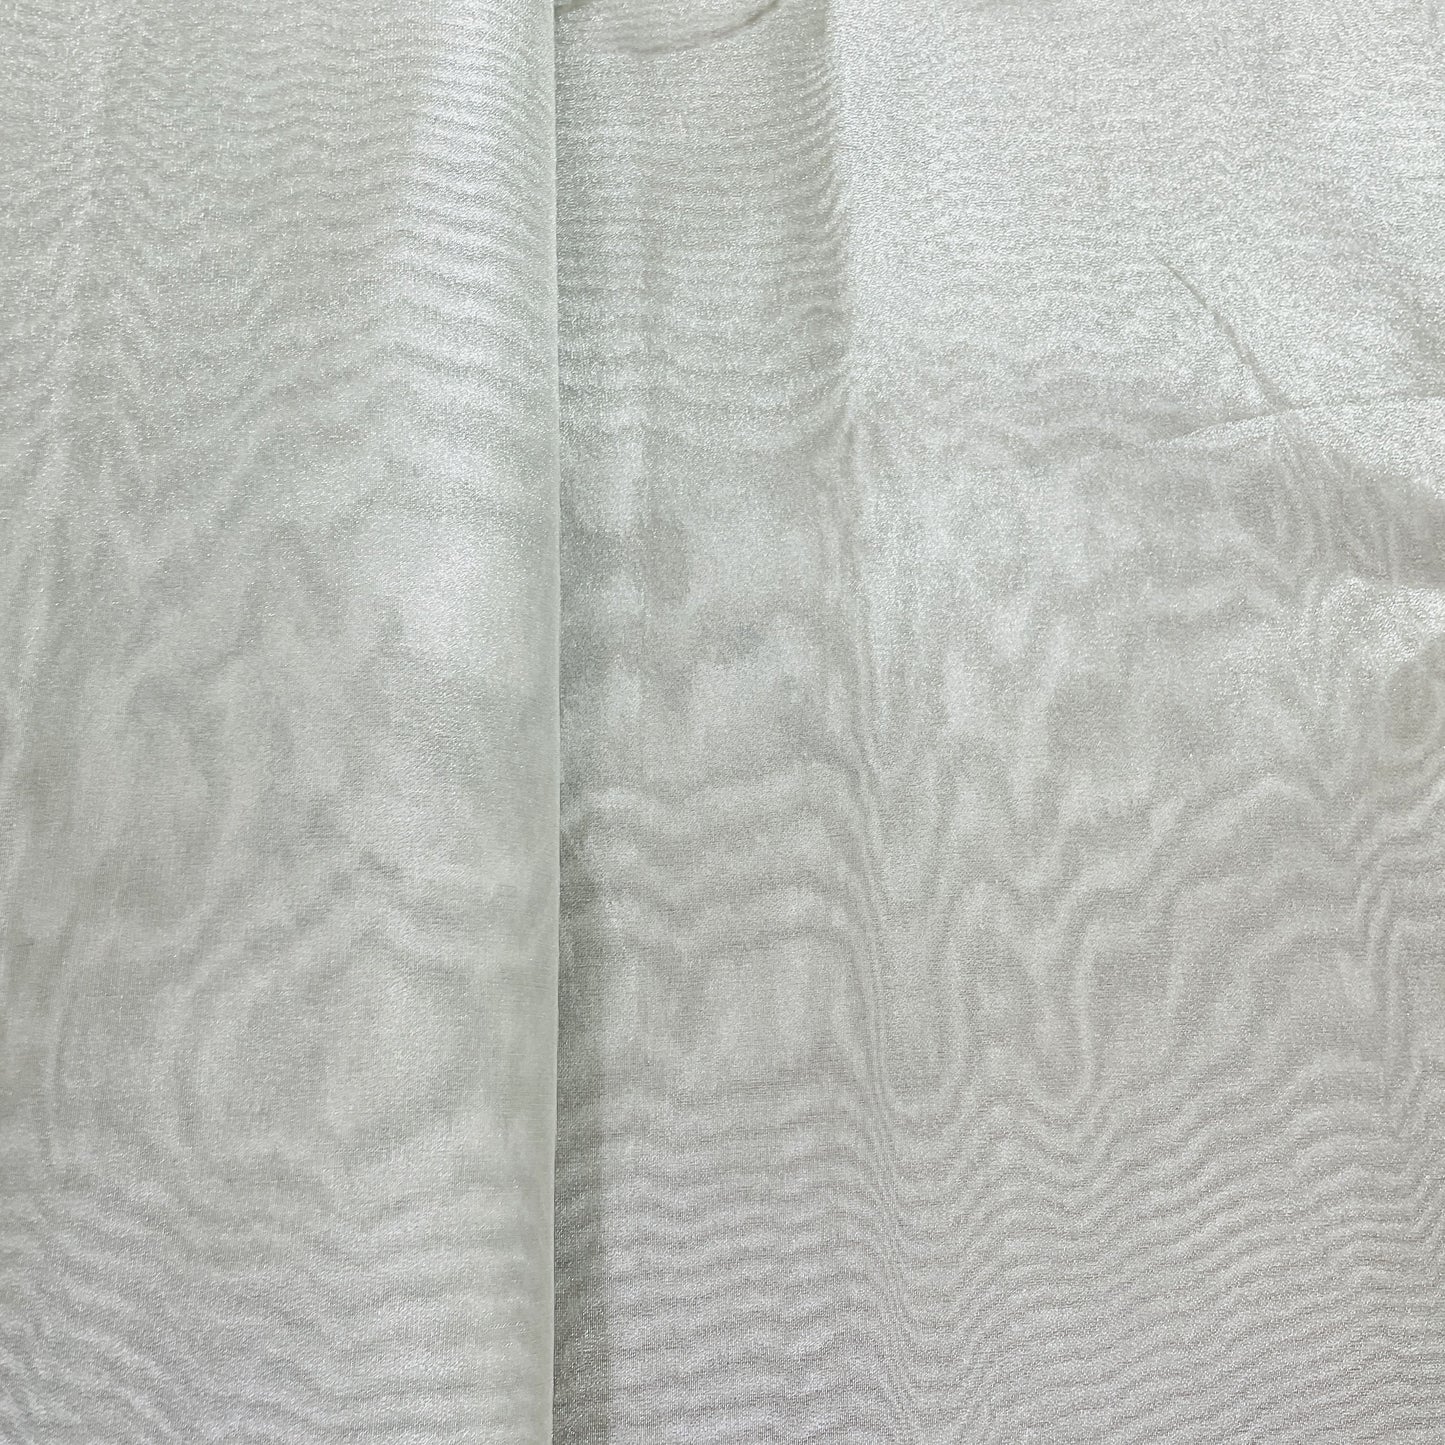 Silver Solid Banarsi Satin Fabric